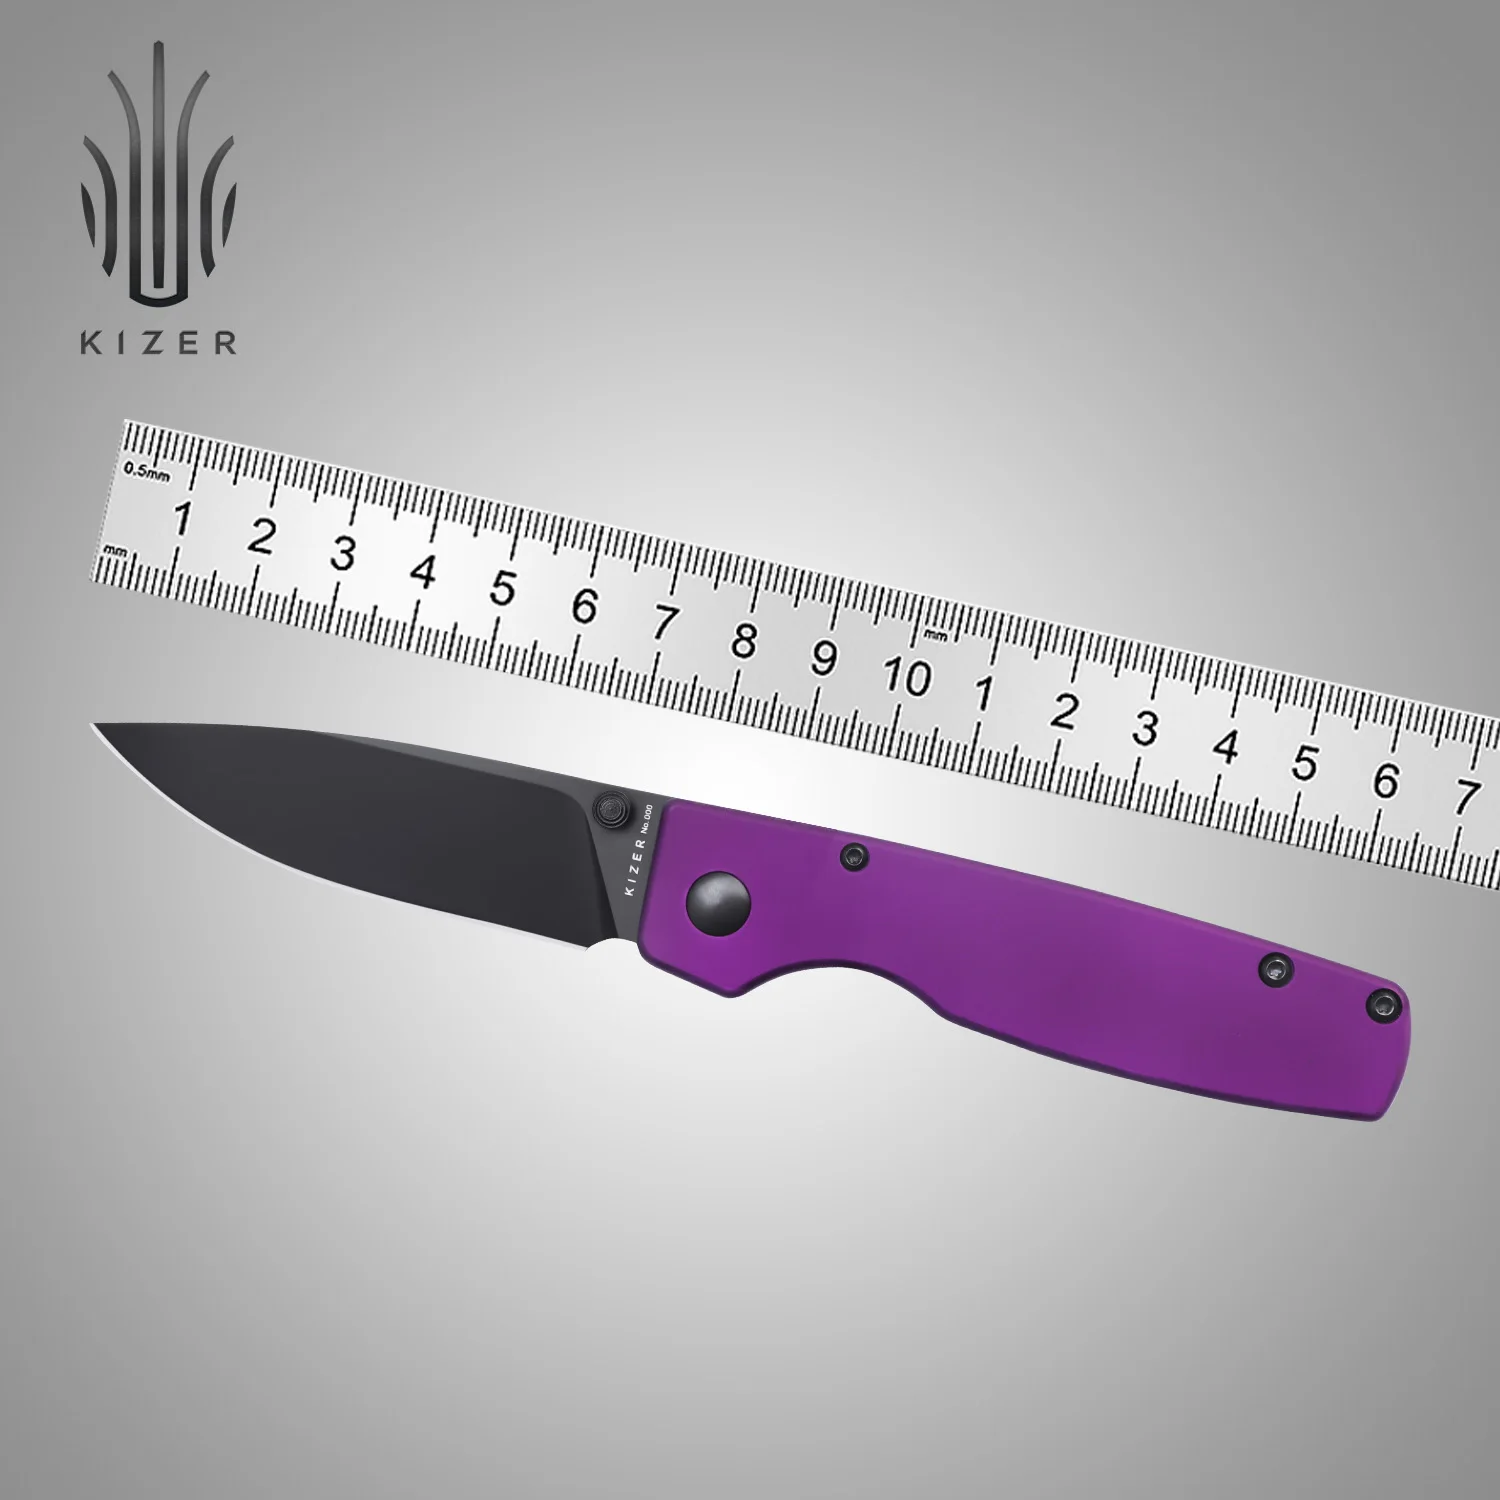 Kizer Survival Pocket Knife V3605C3/V3605C4 Original 2022 New Richlite/Aluminium Handle with 154CM Steel Blade Folding Knife